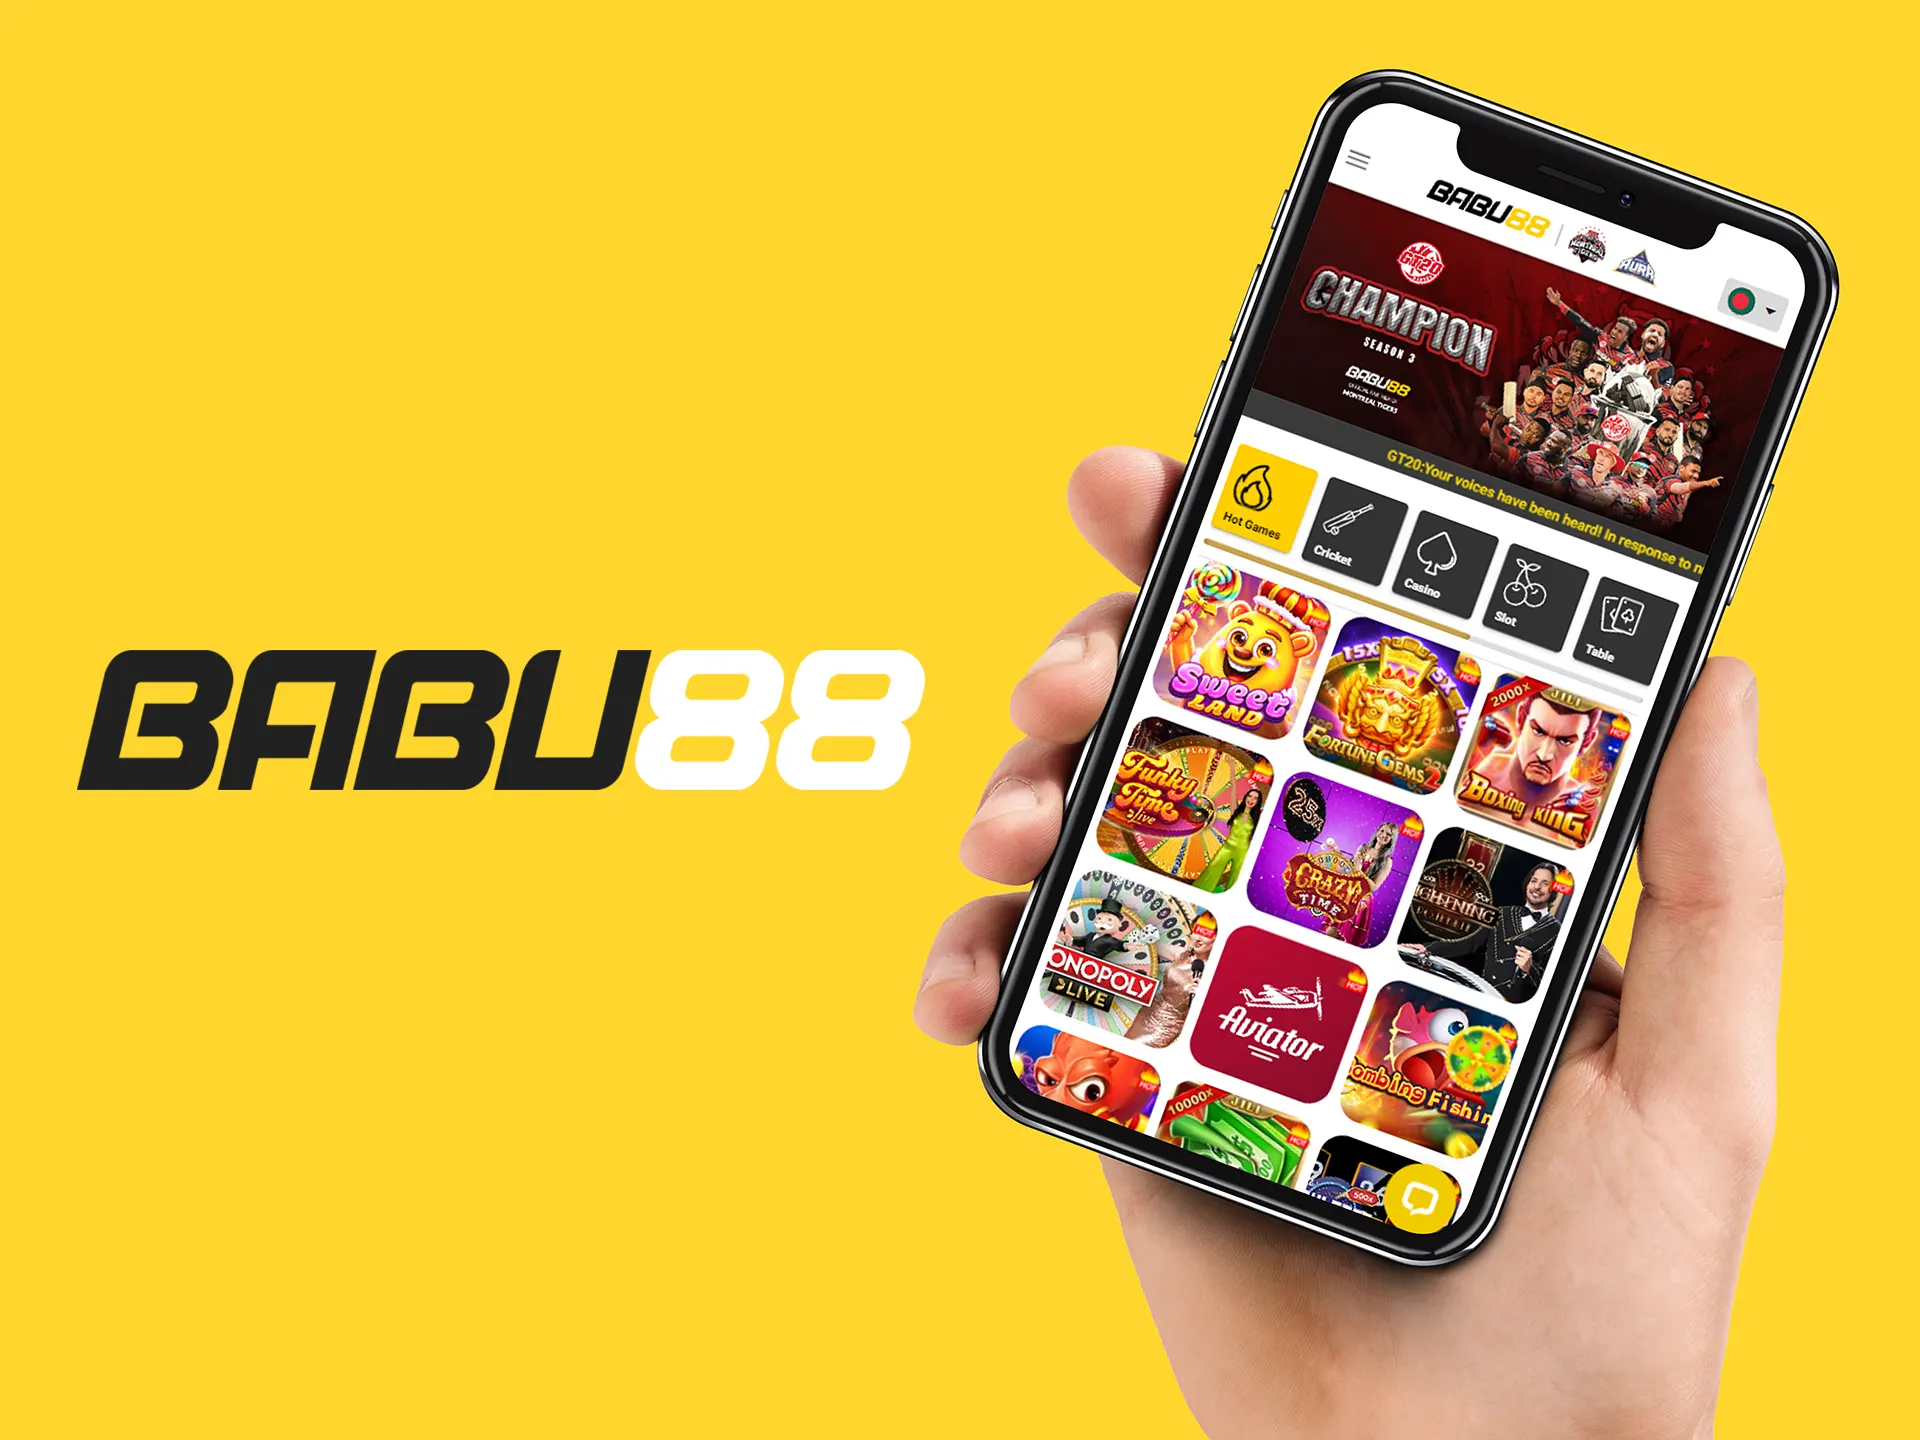 Make bets using Babu88 app.